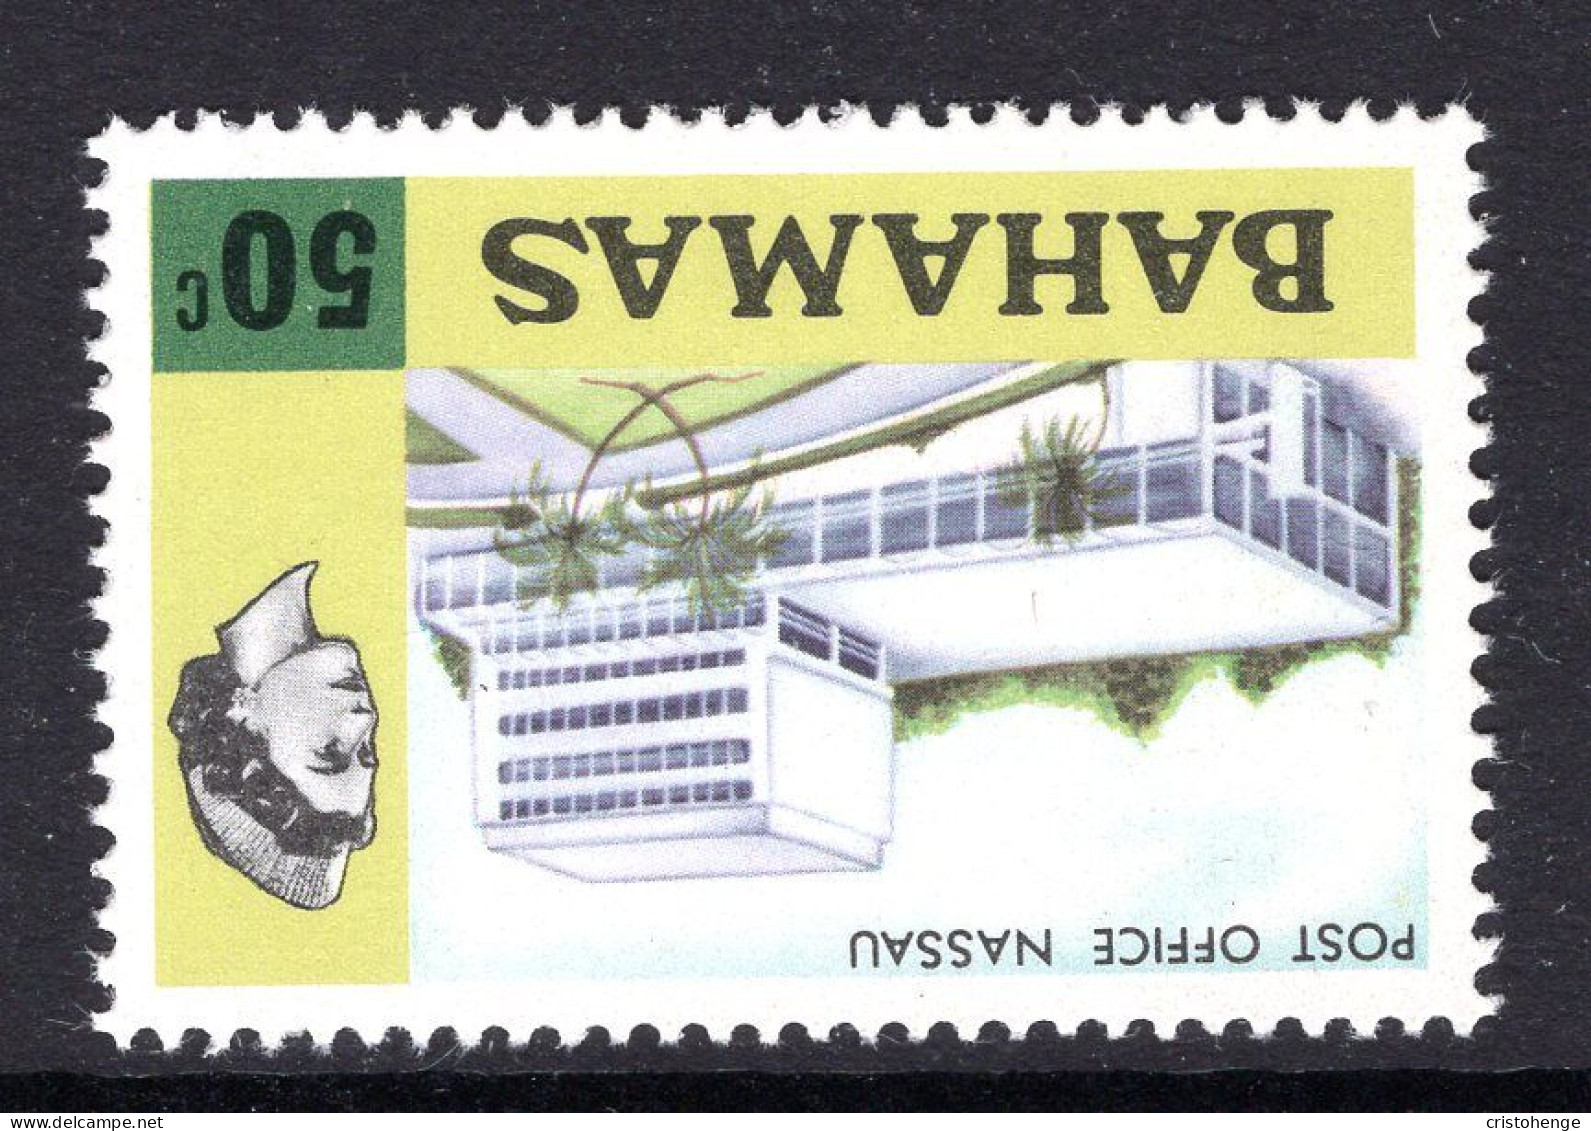 Bahamas 1972-73 Pictorials - 50c Post Office- Wmk. Crown To Left Of CA - MNH (SG 397w) - 1963-1973 Autonomie Interne